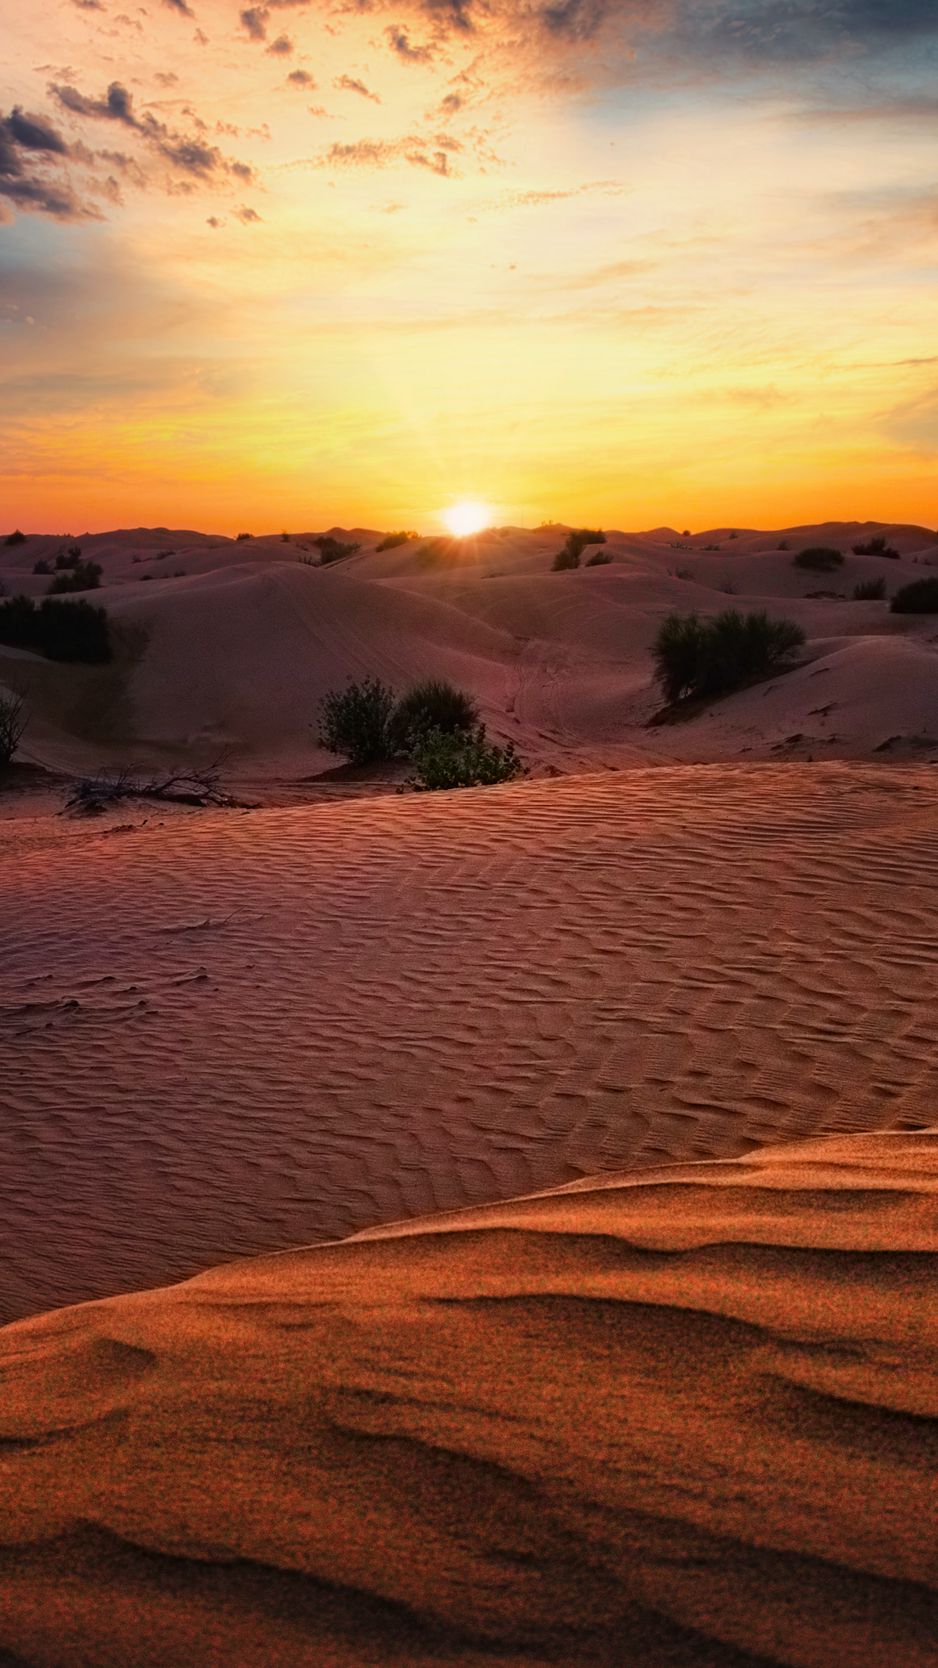 999 Desert Sunset Pictures  Download Free Images on Unsplash